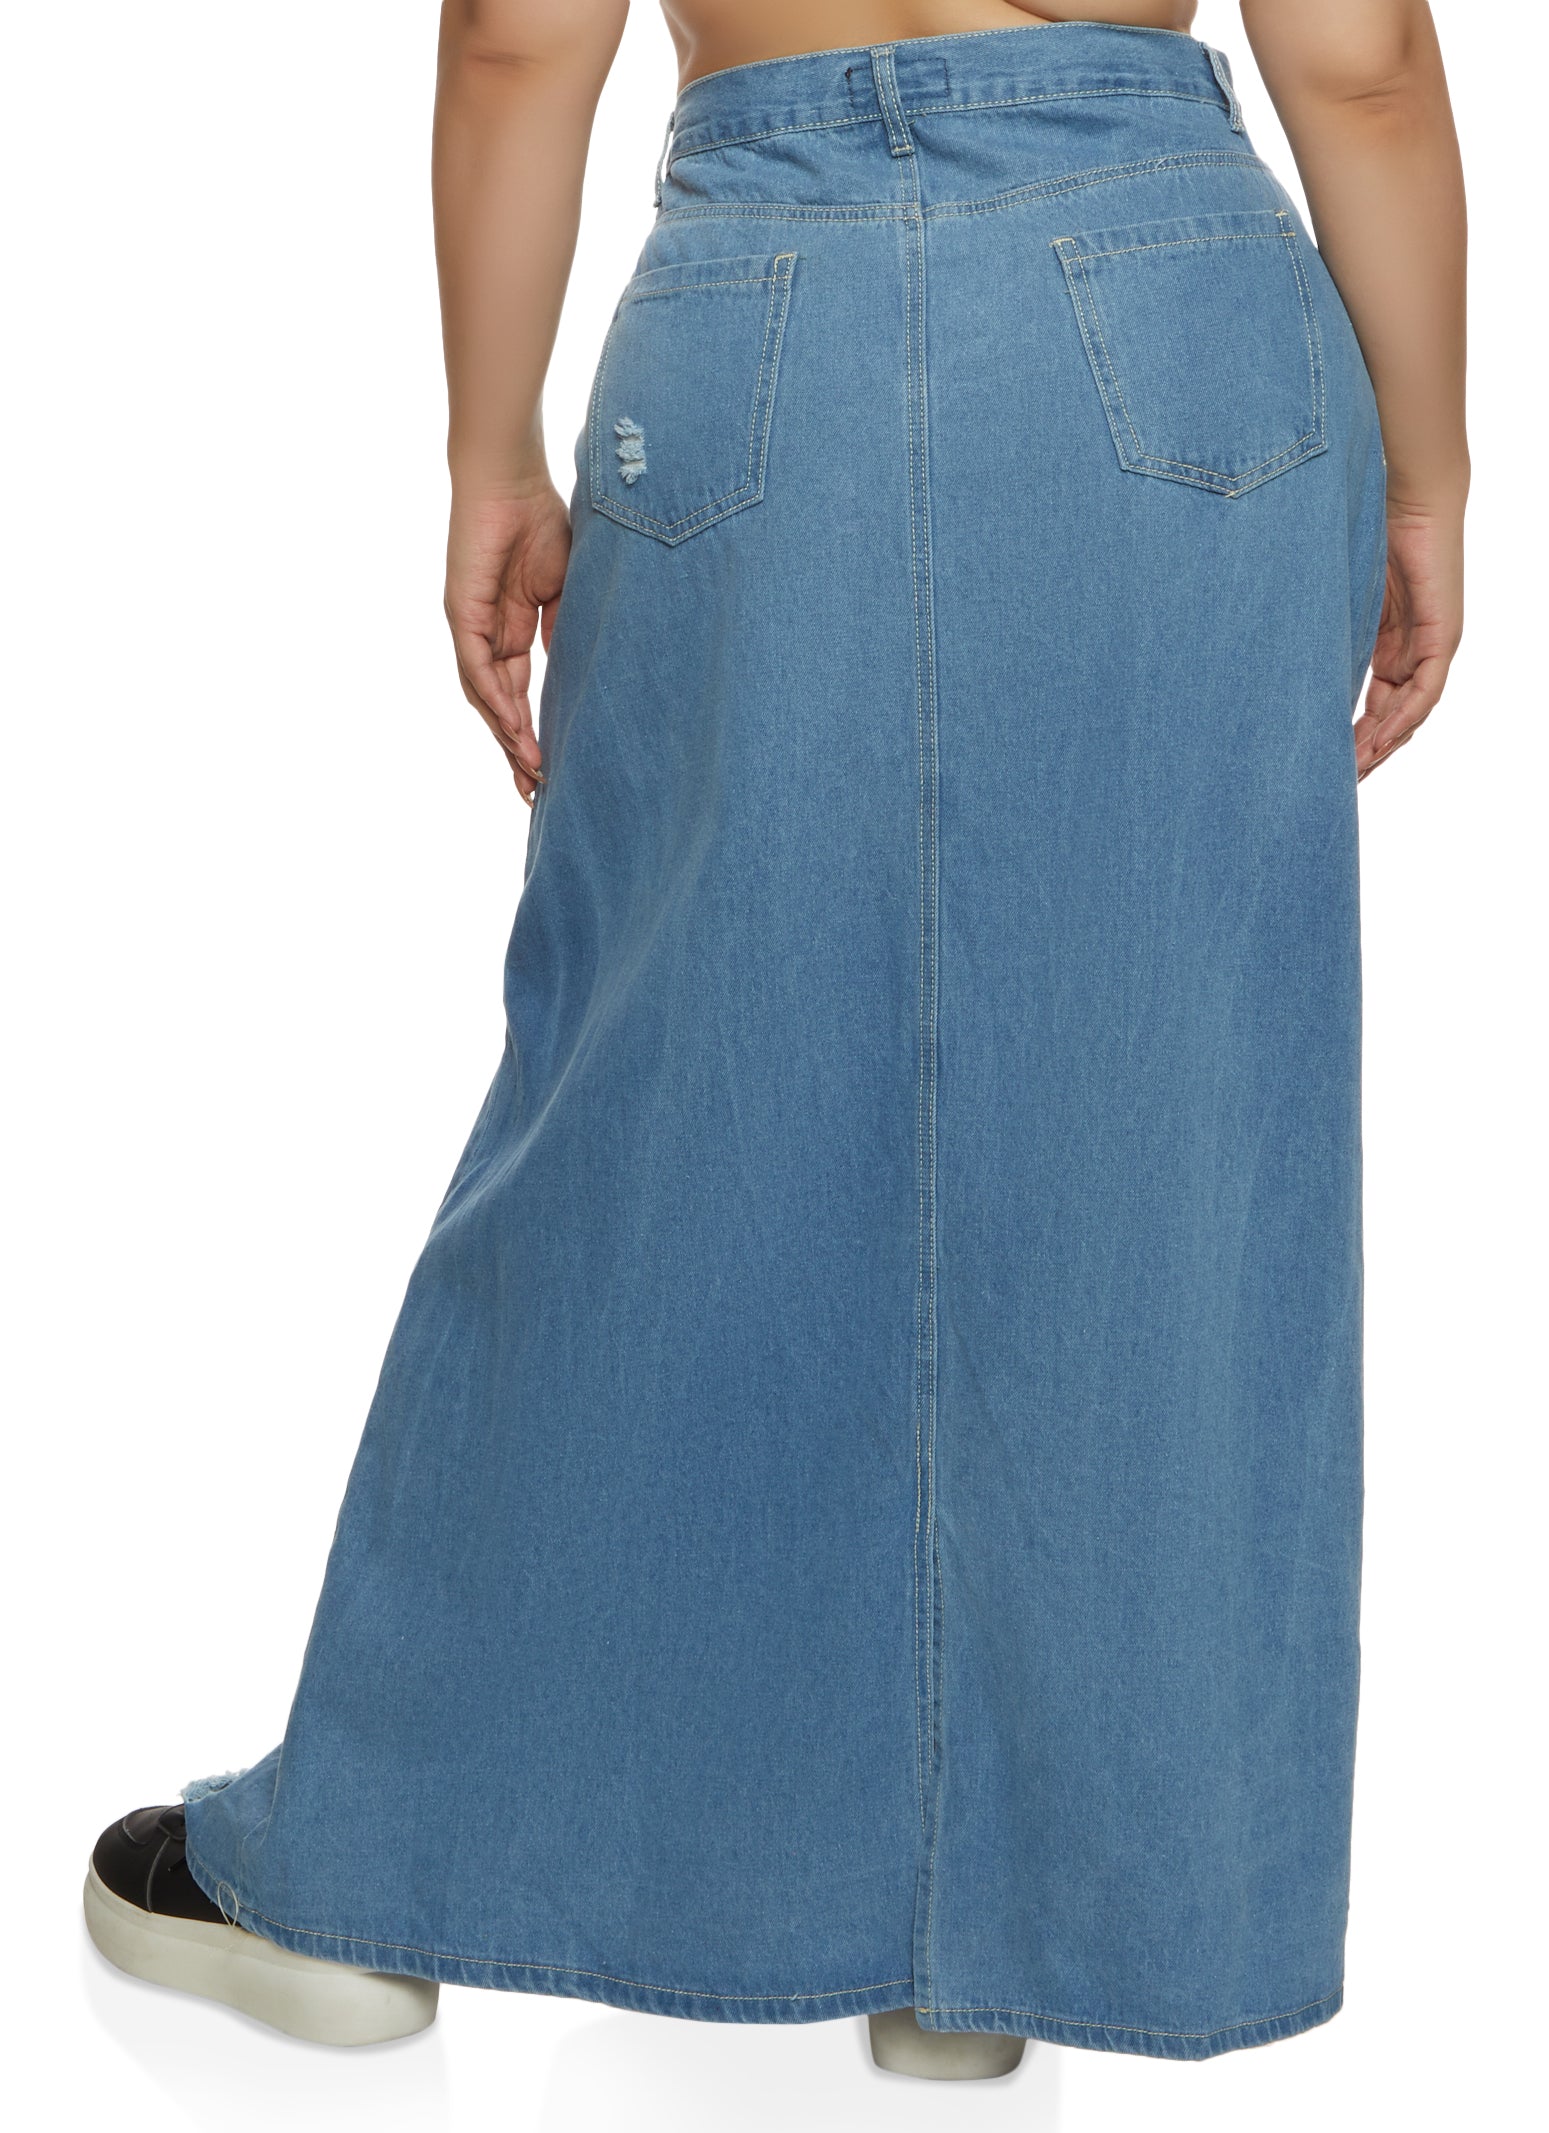 Boho Faded Front Slit Distressed Denim Midi Skirt | eBay